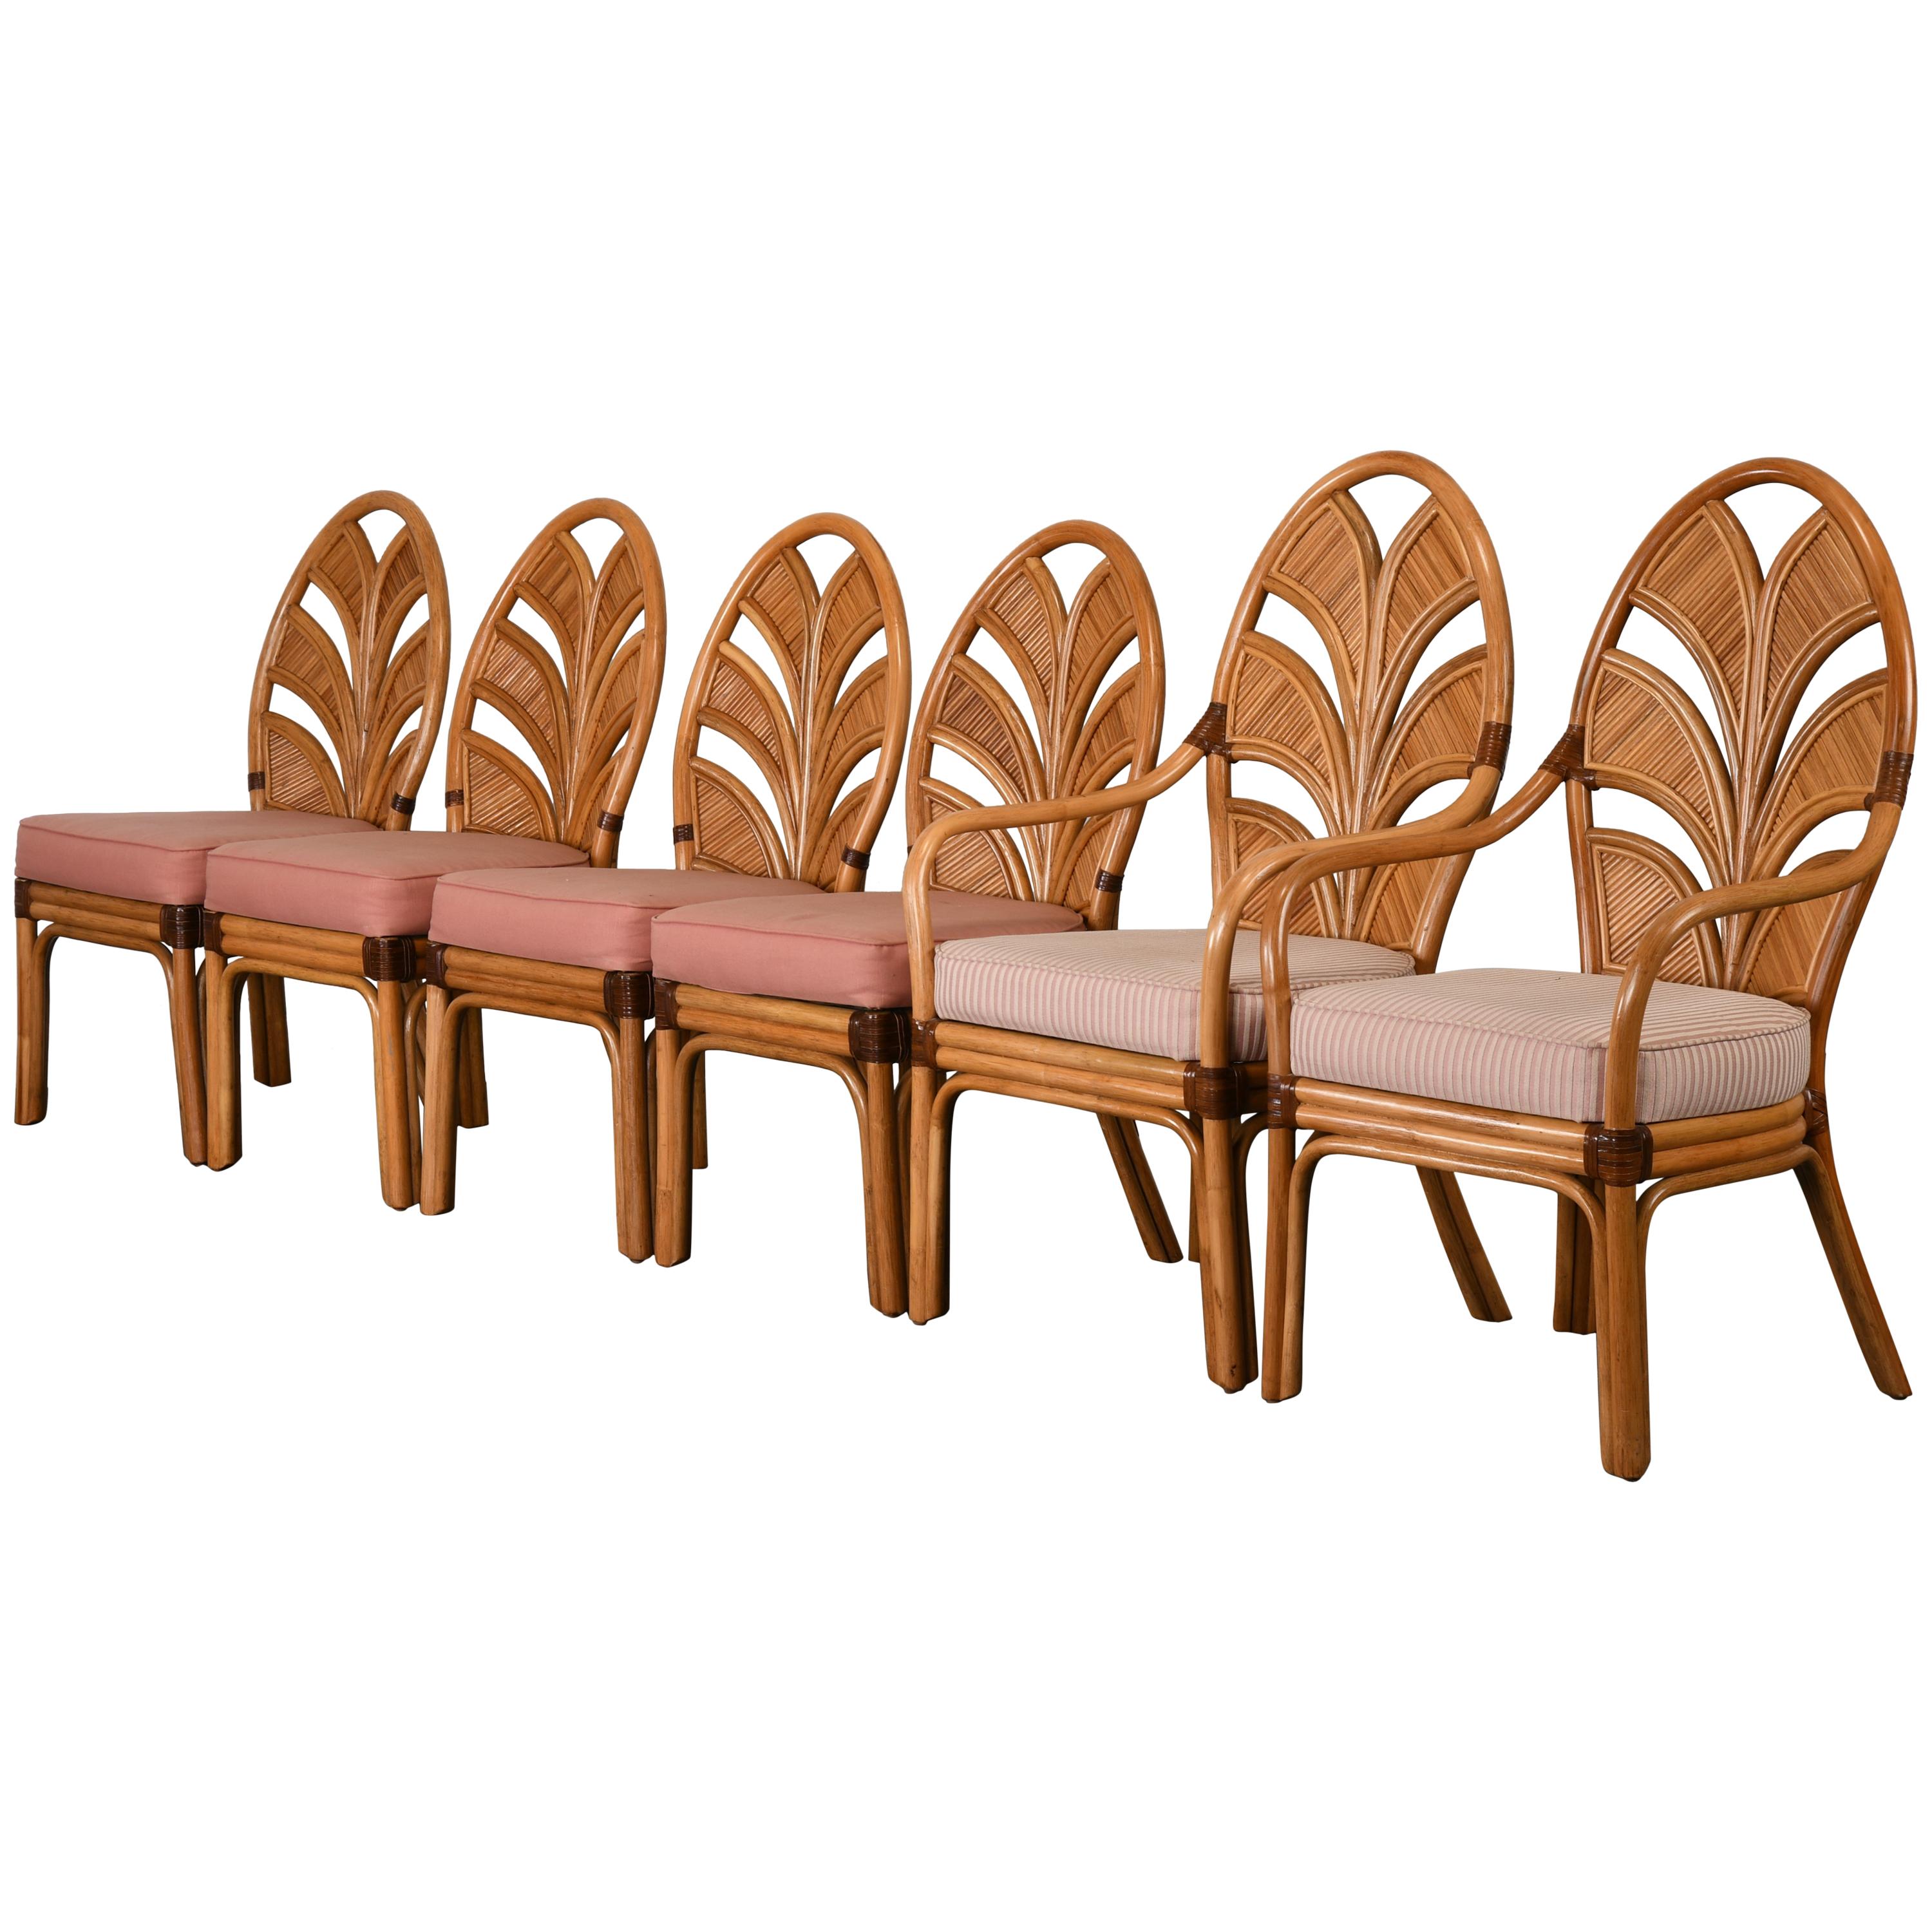 Set of Six Mid-Century Modern Rattan Dining Chairs, 1970s